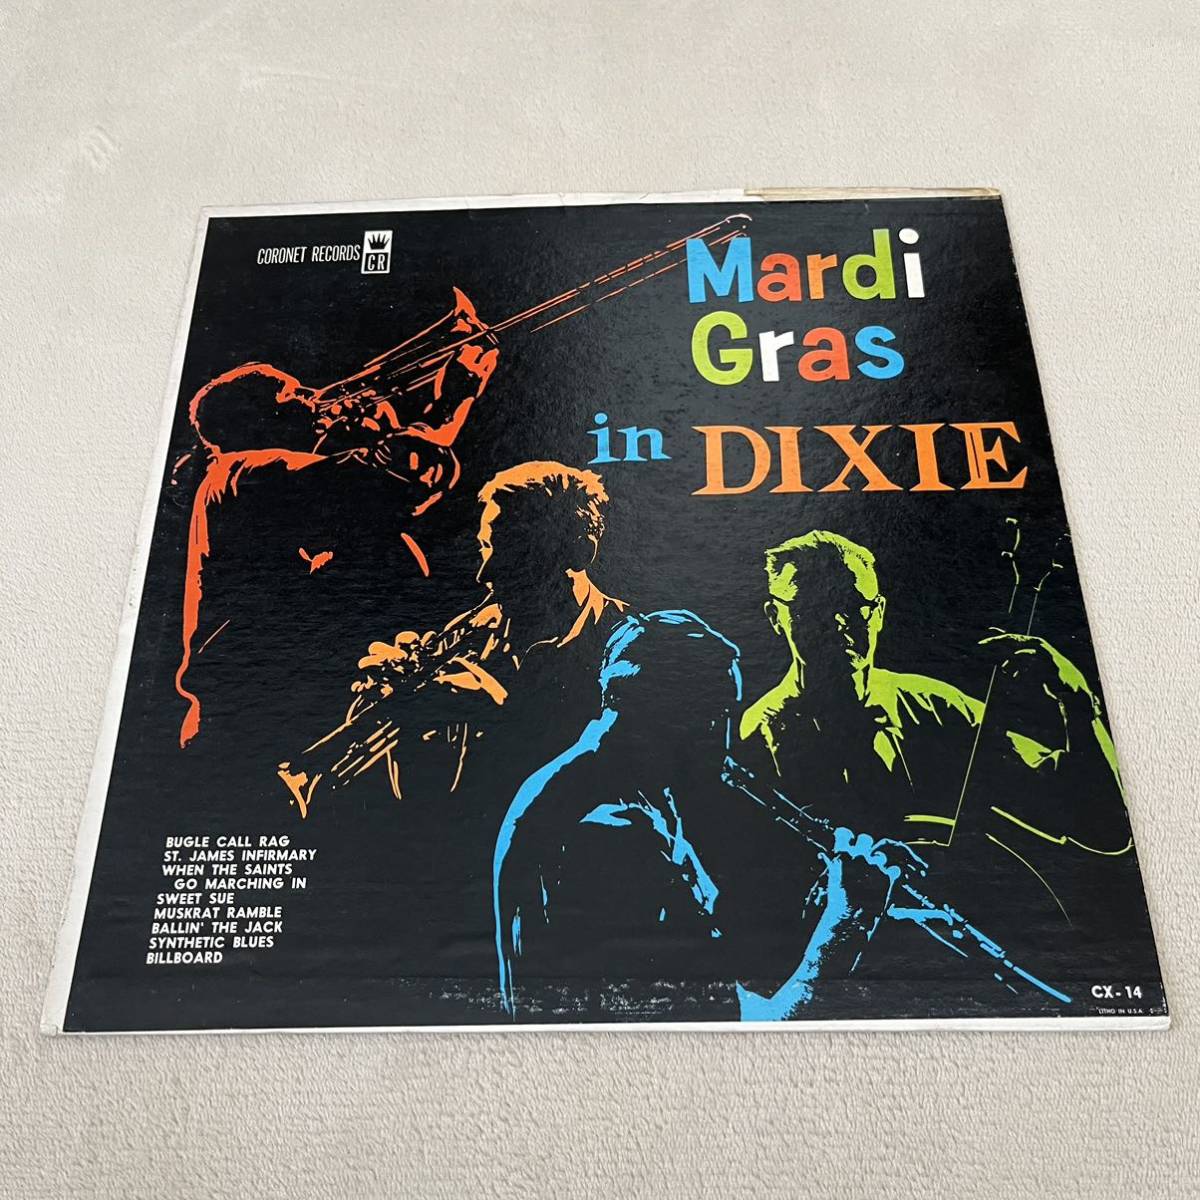 【US盤米盤】MARDI GRAS in DIXIE マルディグラインディキシー BUGLE CALL RAG ST. JAMES INFIRMARY / LP レコード / CX-14 / ジャズ /_画像1